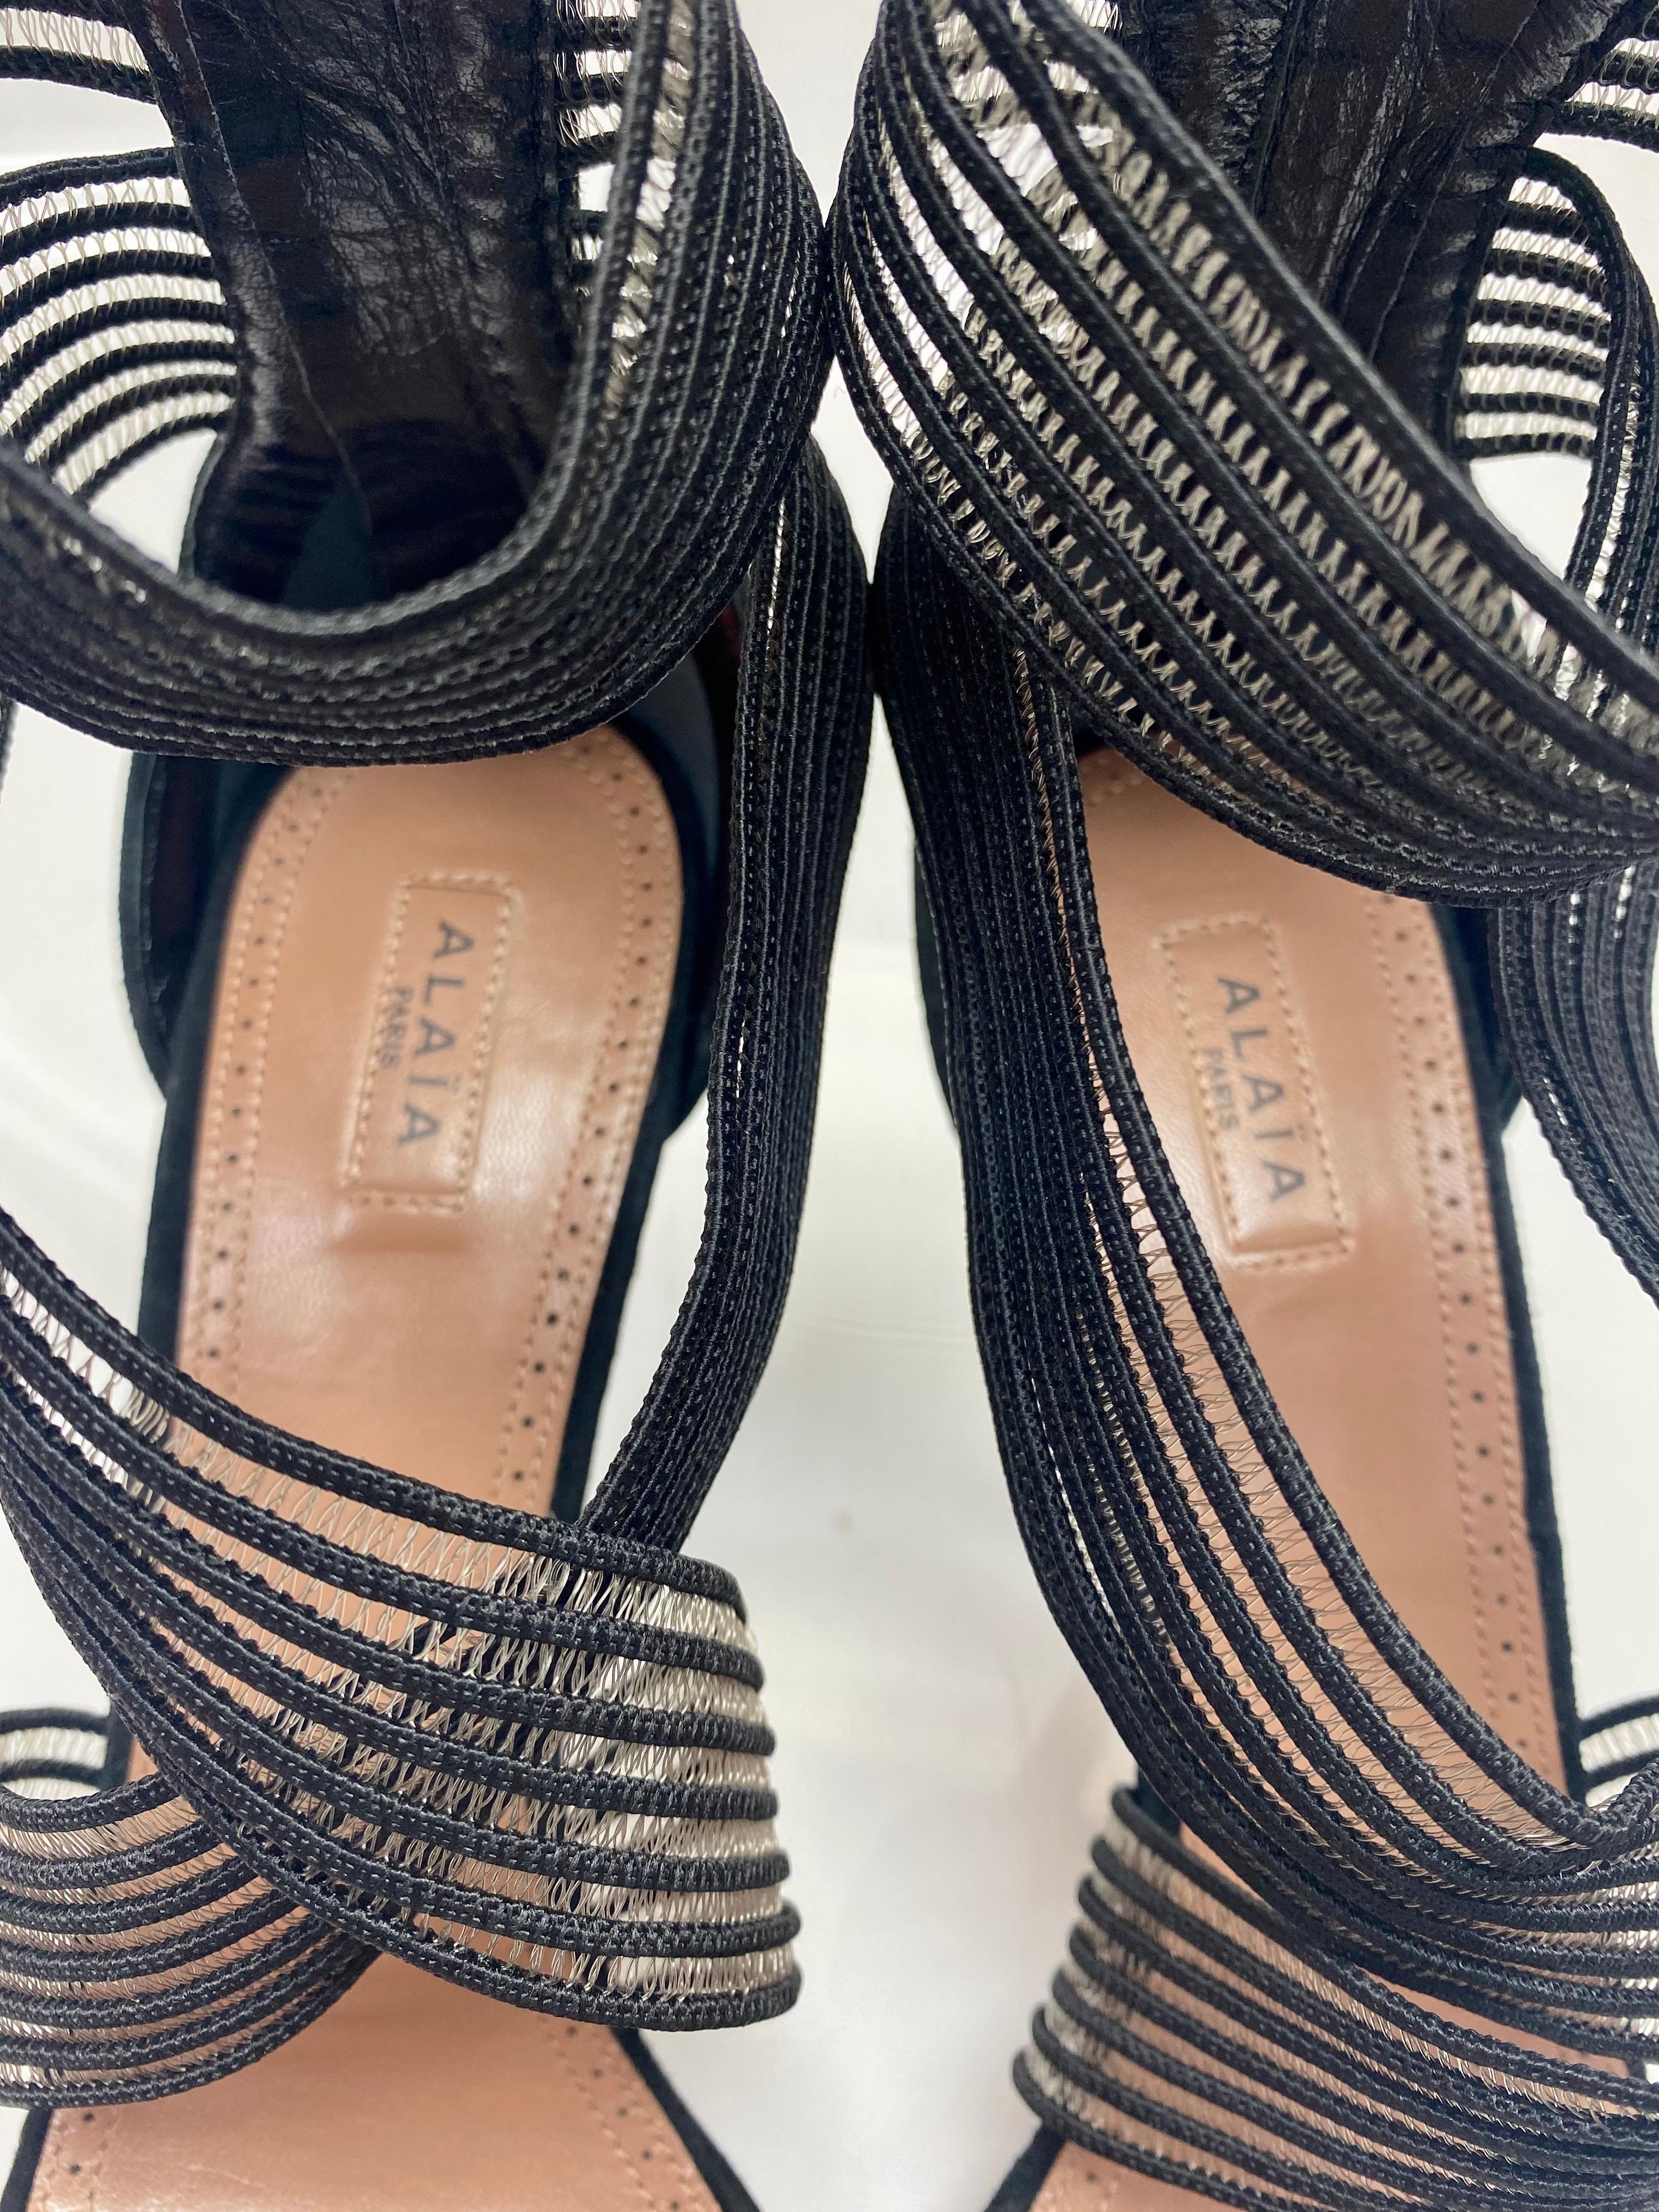 Alaia Black Suede Ribbon Sandals Heels Size 40 For Sale 3